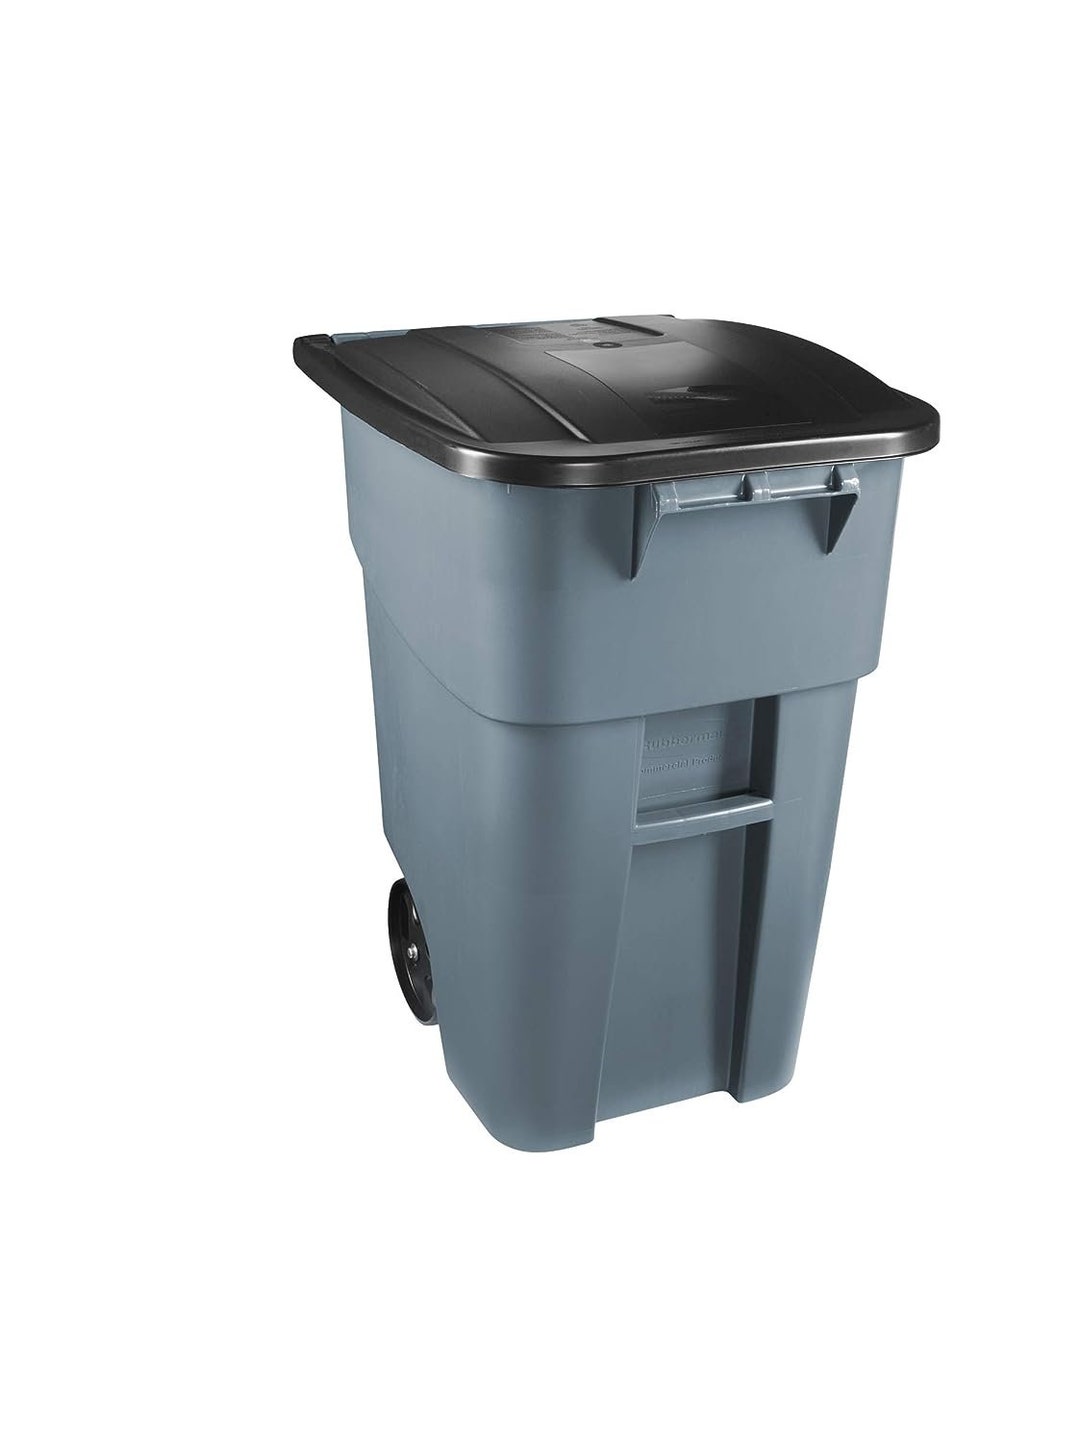 Rubbermaid 50 Gallon Trash Can With Wheels Garbage Bin - Etsy